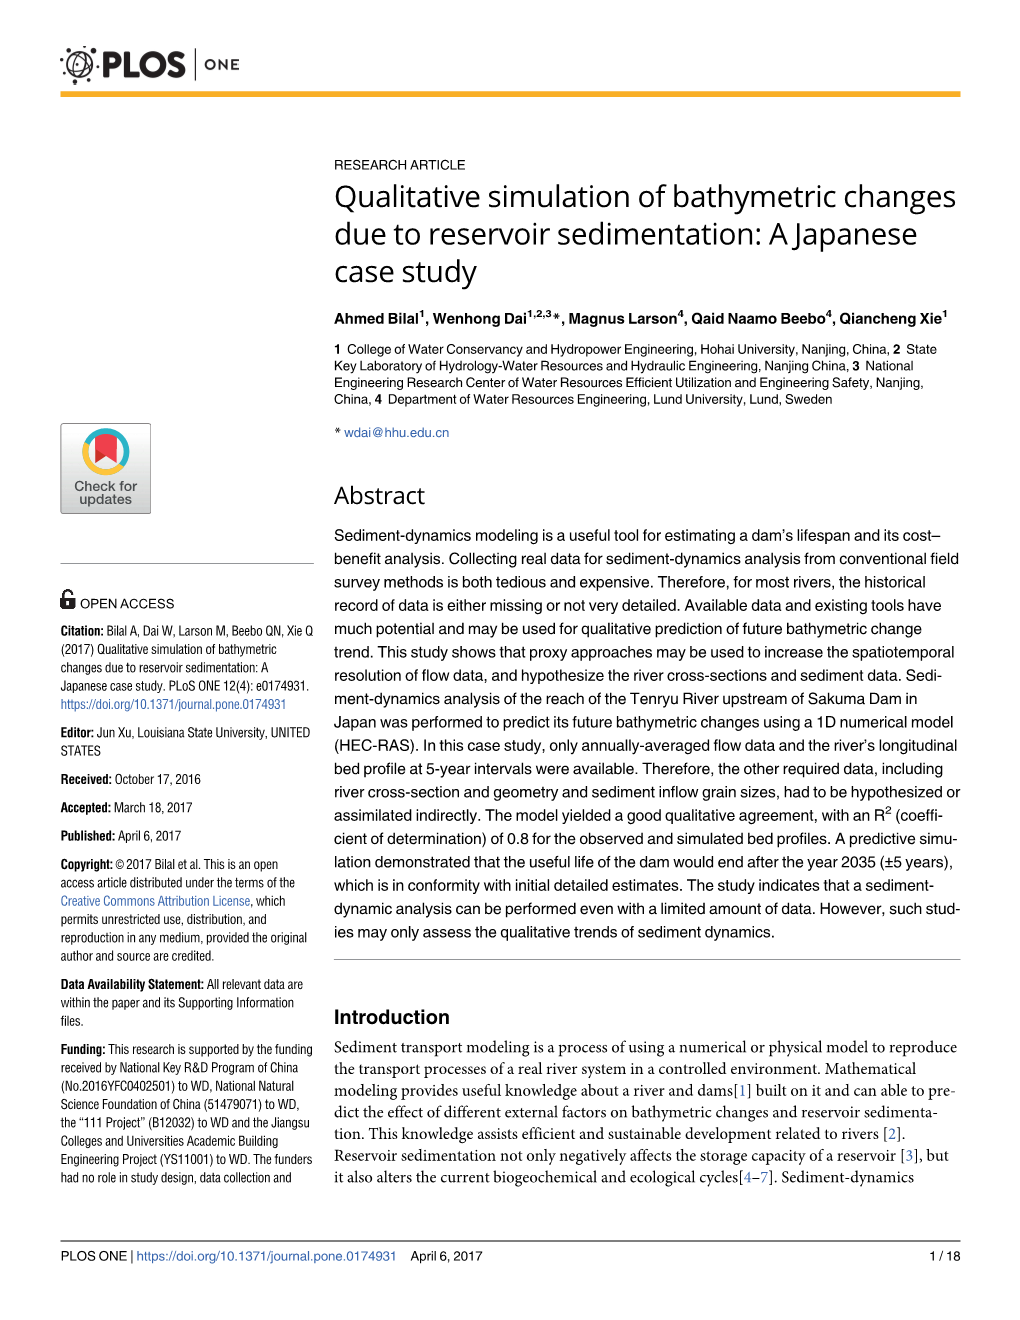 Qualitative Simulation of Bathymetric Changes Due to Reservoir Sedimentation: a Japanese Case Study